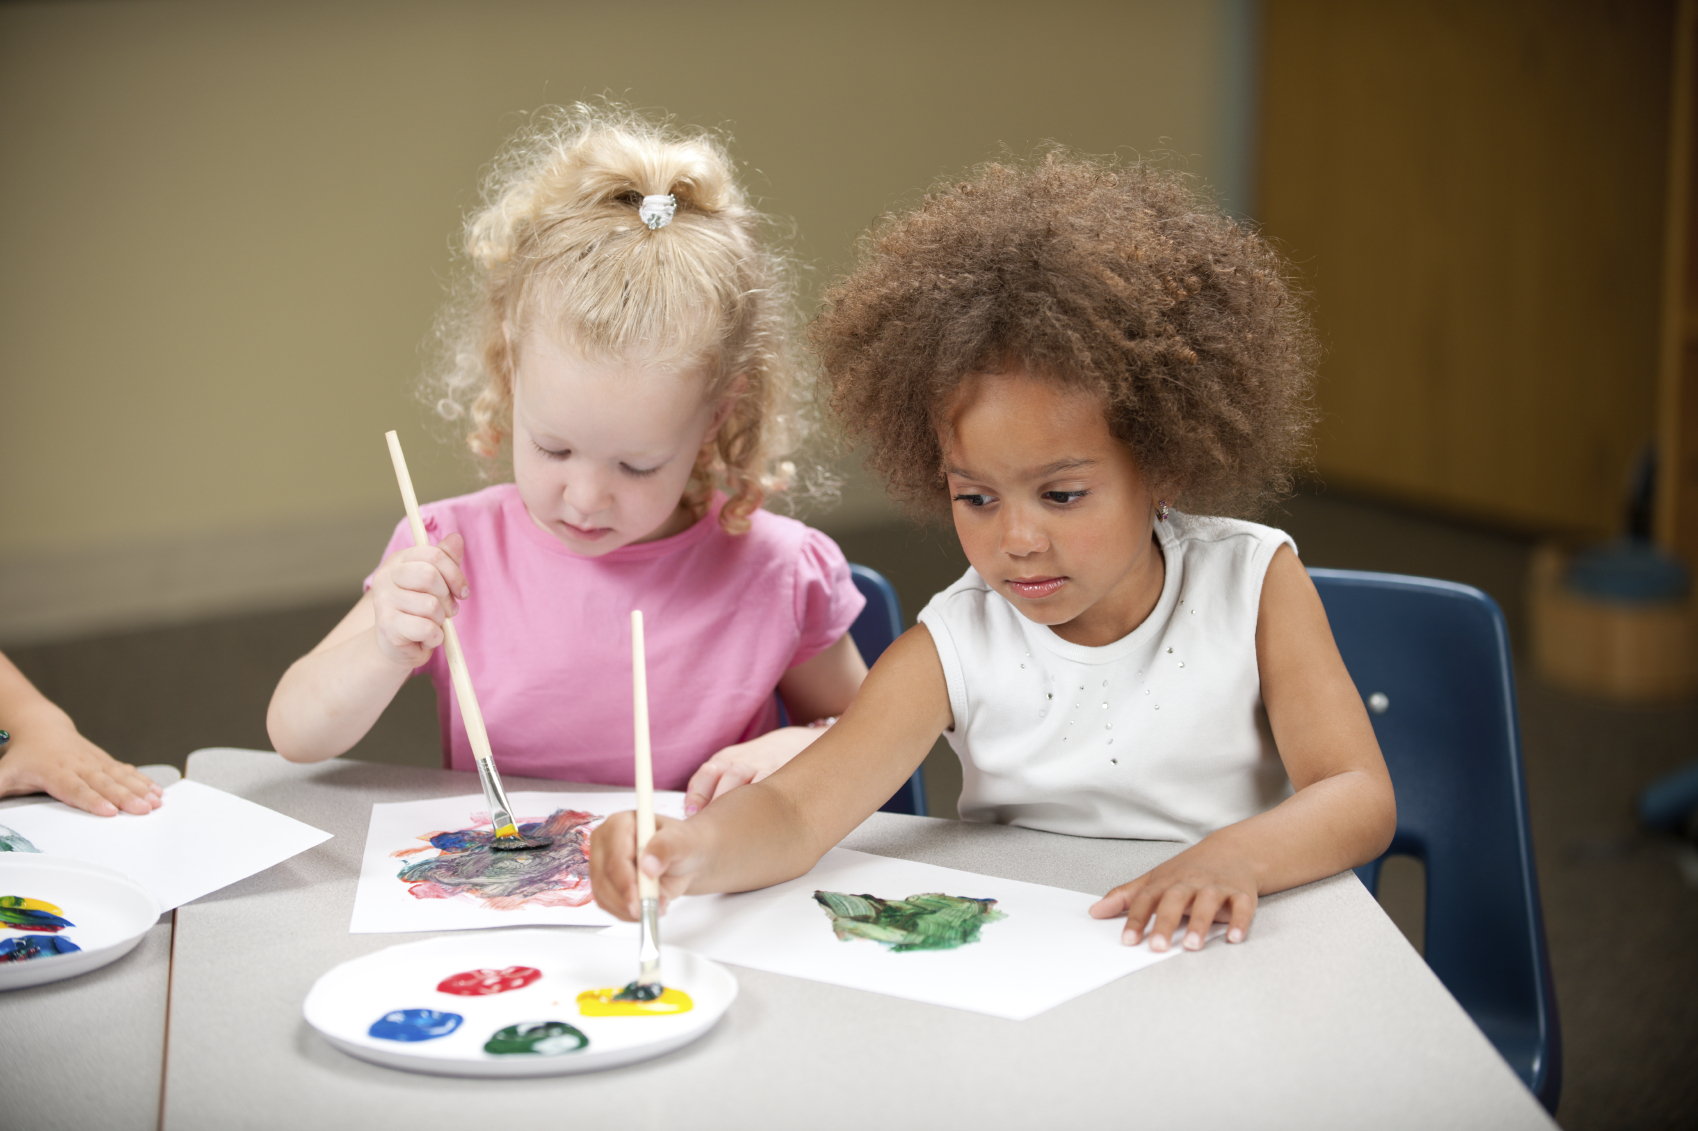 Preschool kids painting in a classroom.